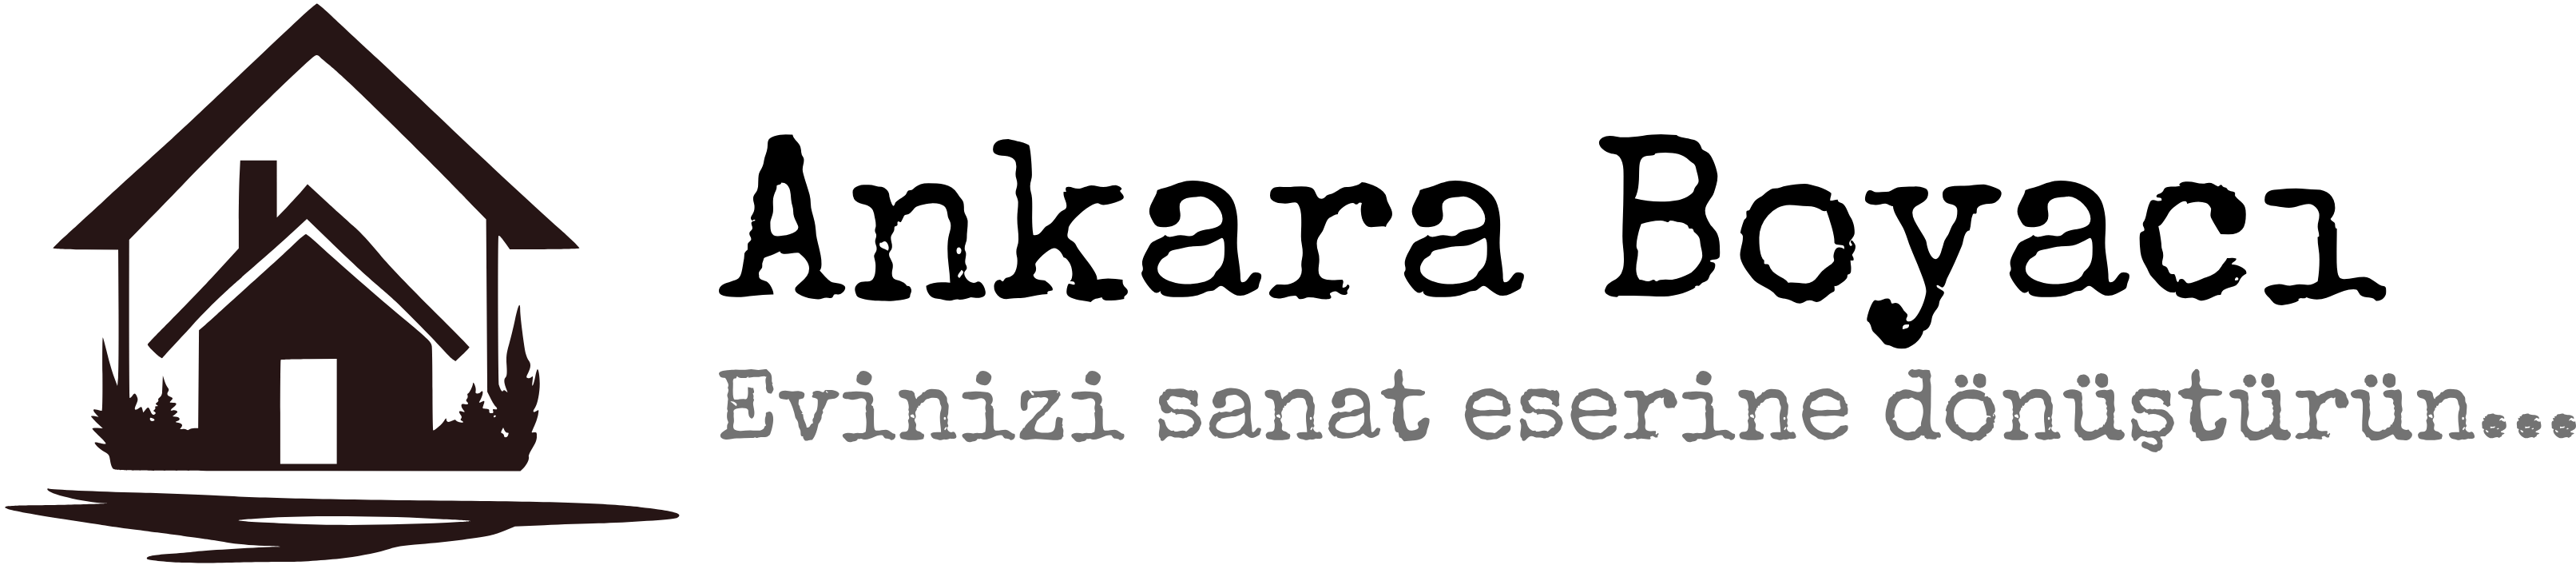 Ankara Boyacı logo görseli